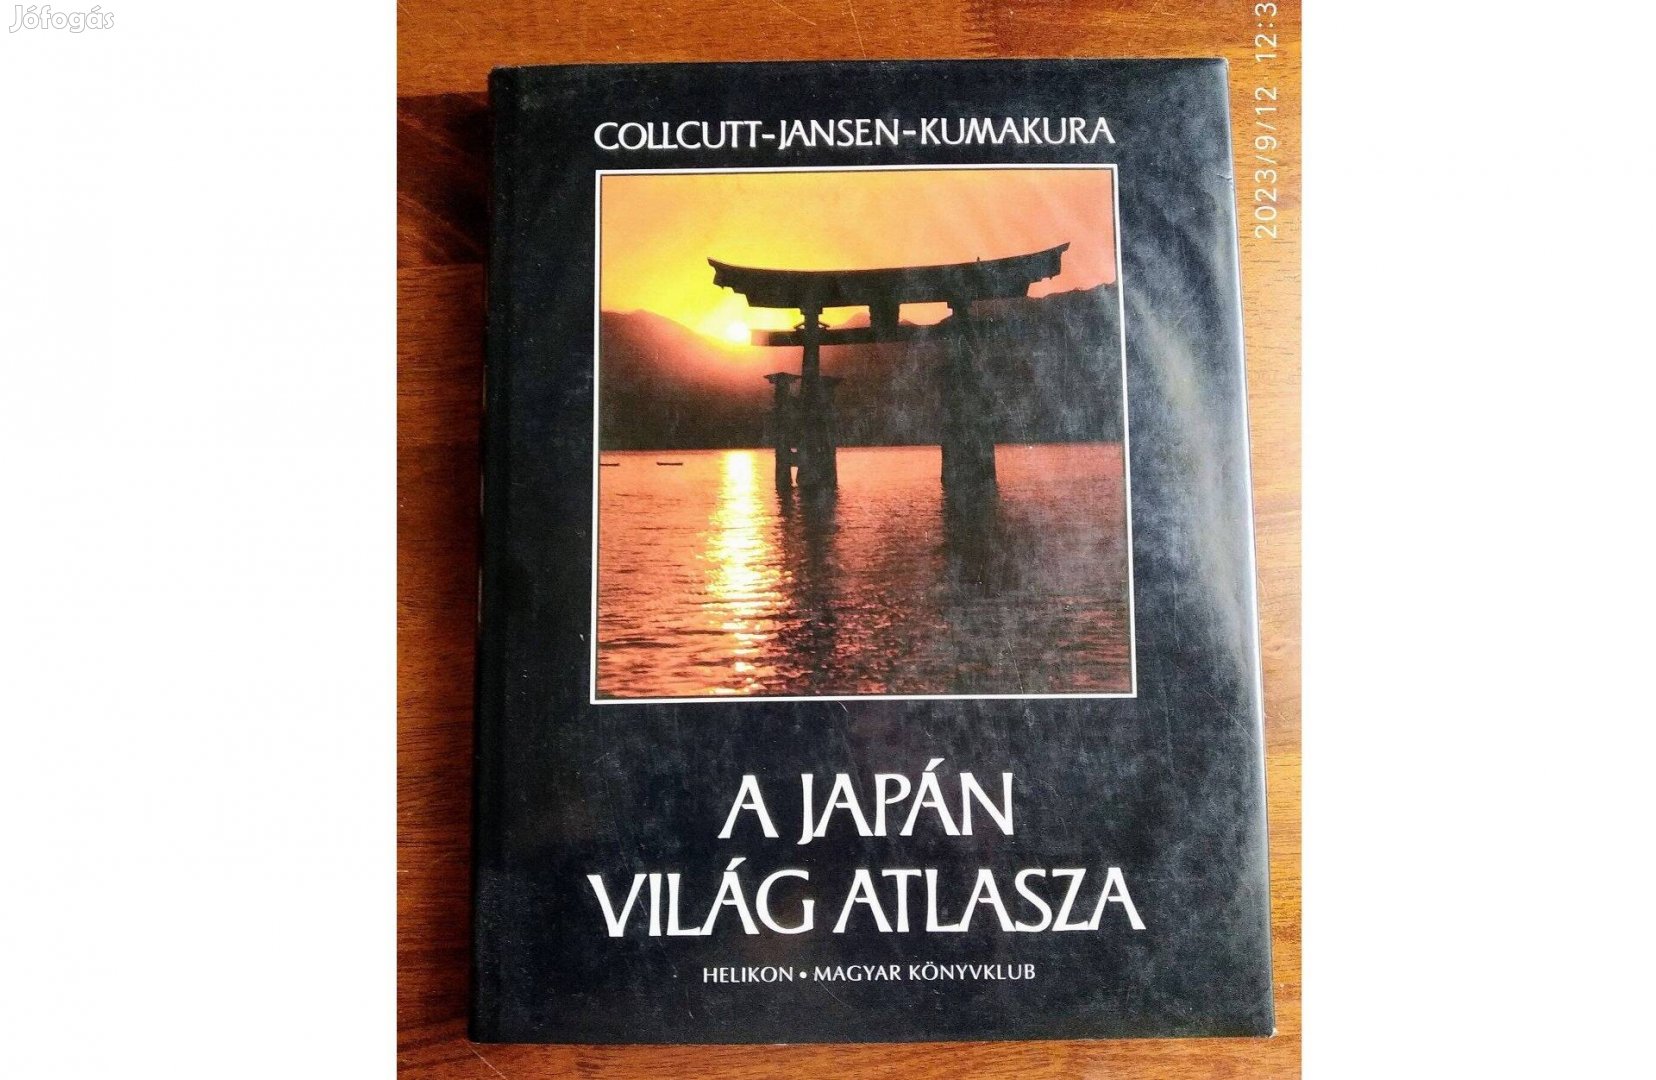 A japán világ atlasza. Collcutt -Jansen -Kumakura: .Helikon